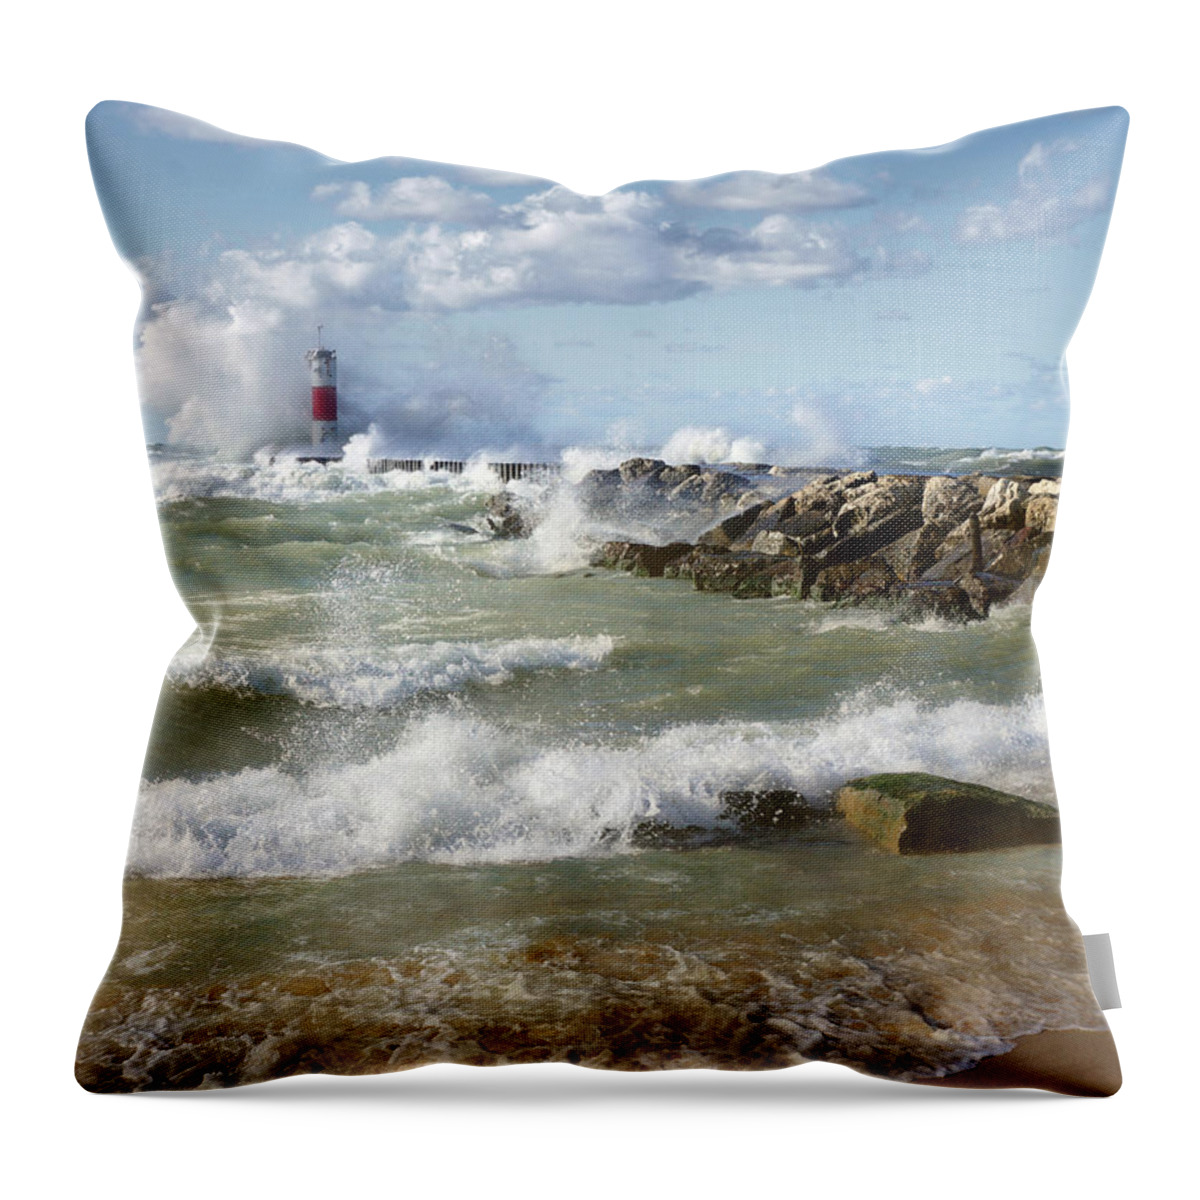 Wind Throw Pillow featuring the photograph Seaside Splash by Kathi Mirto